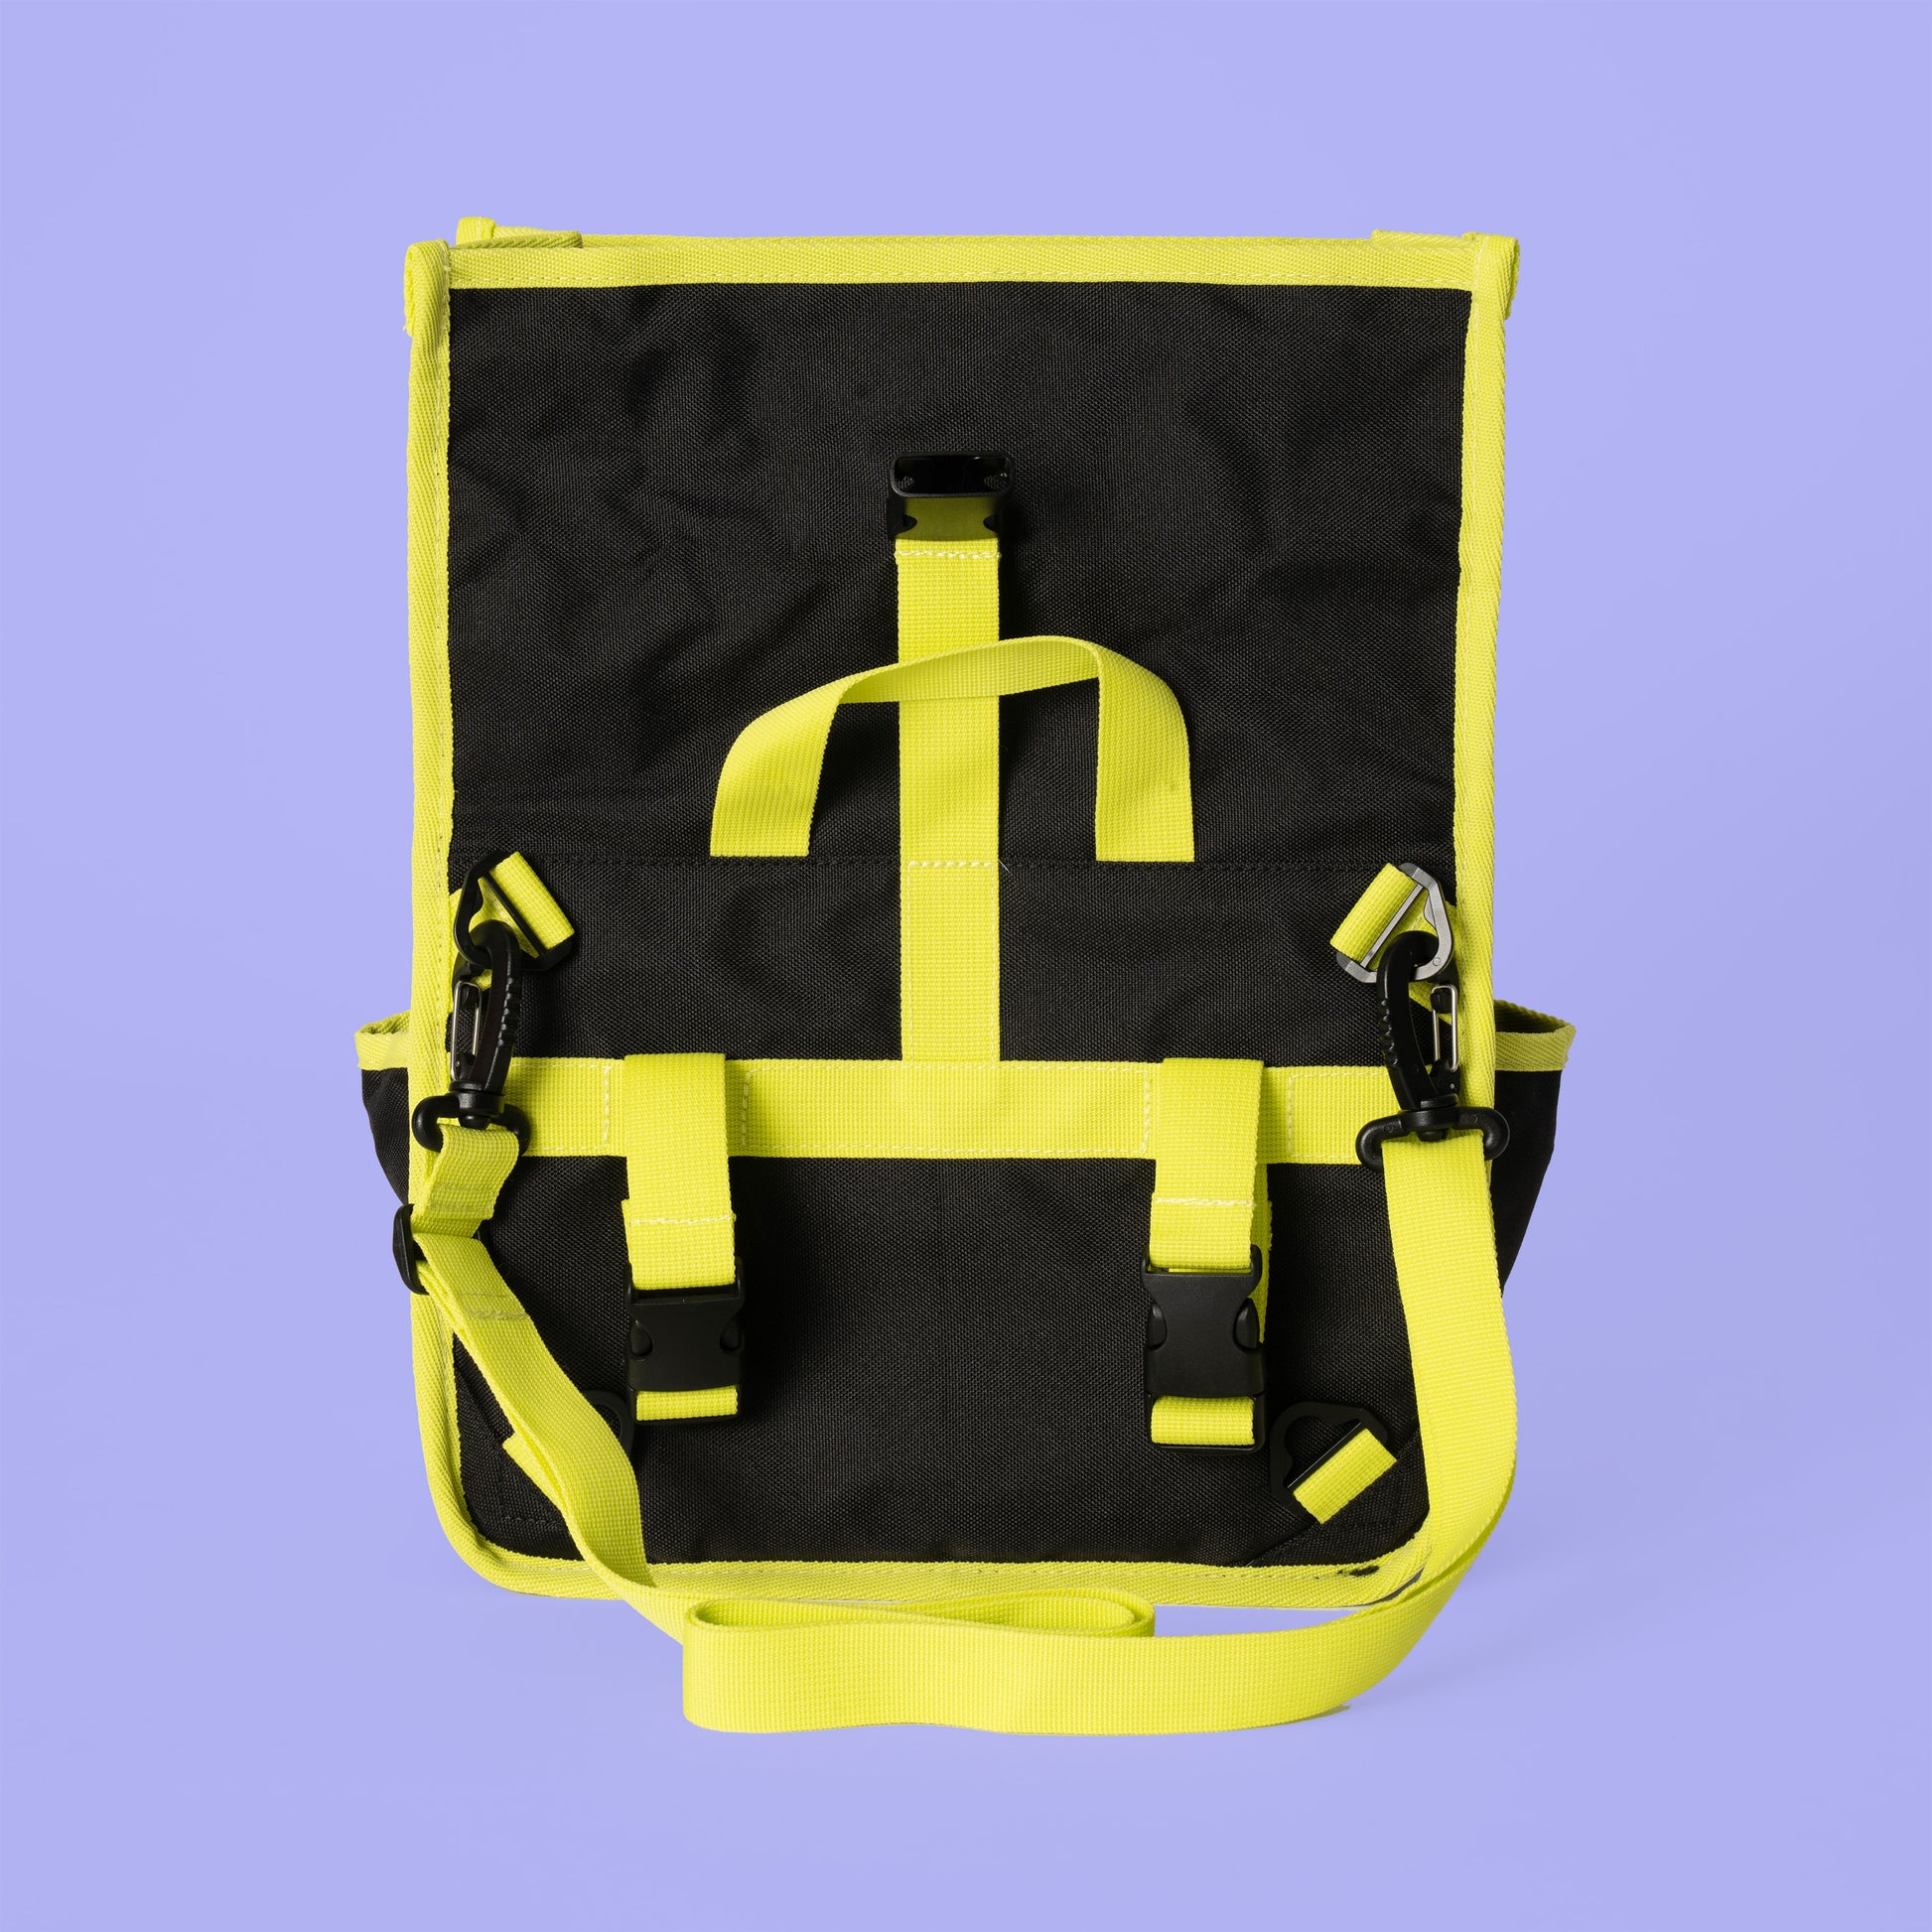 Goodordering black shoulder bag with neon yellow edging